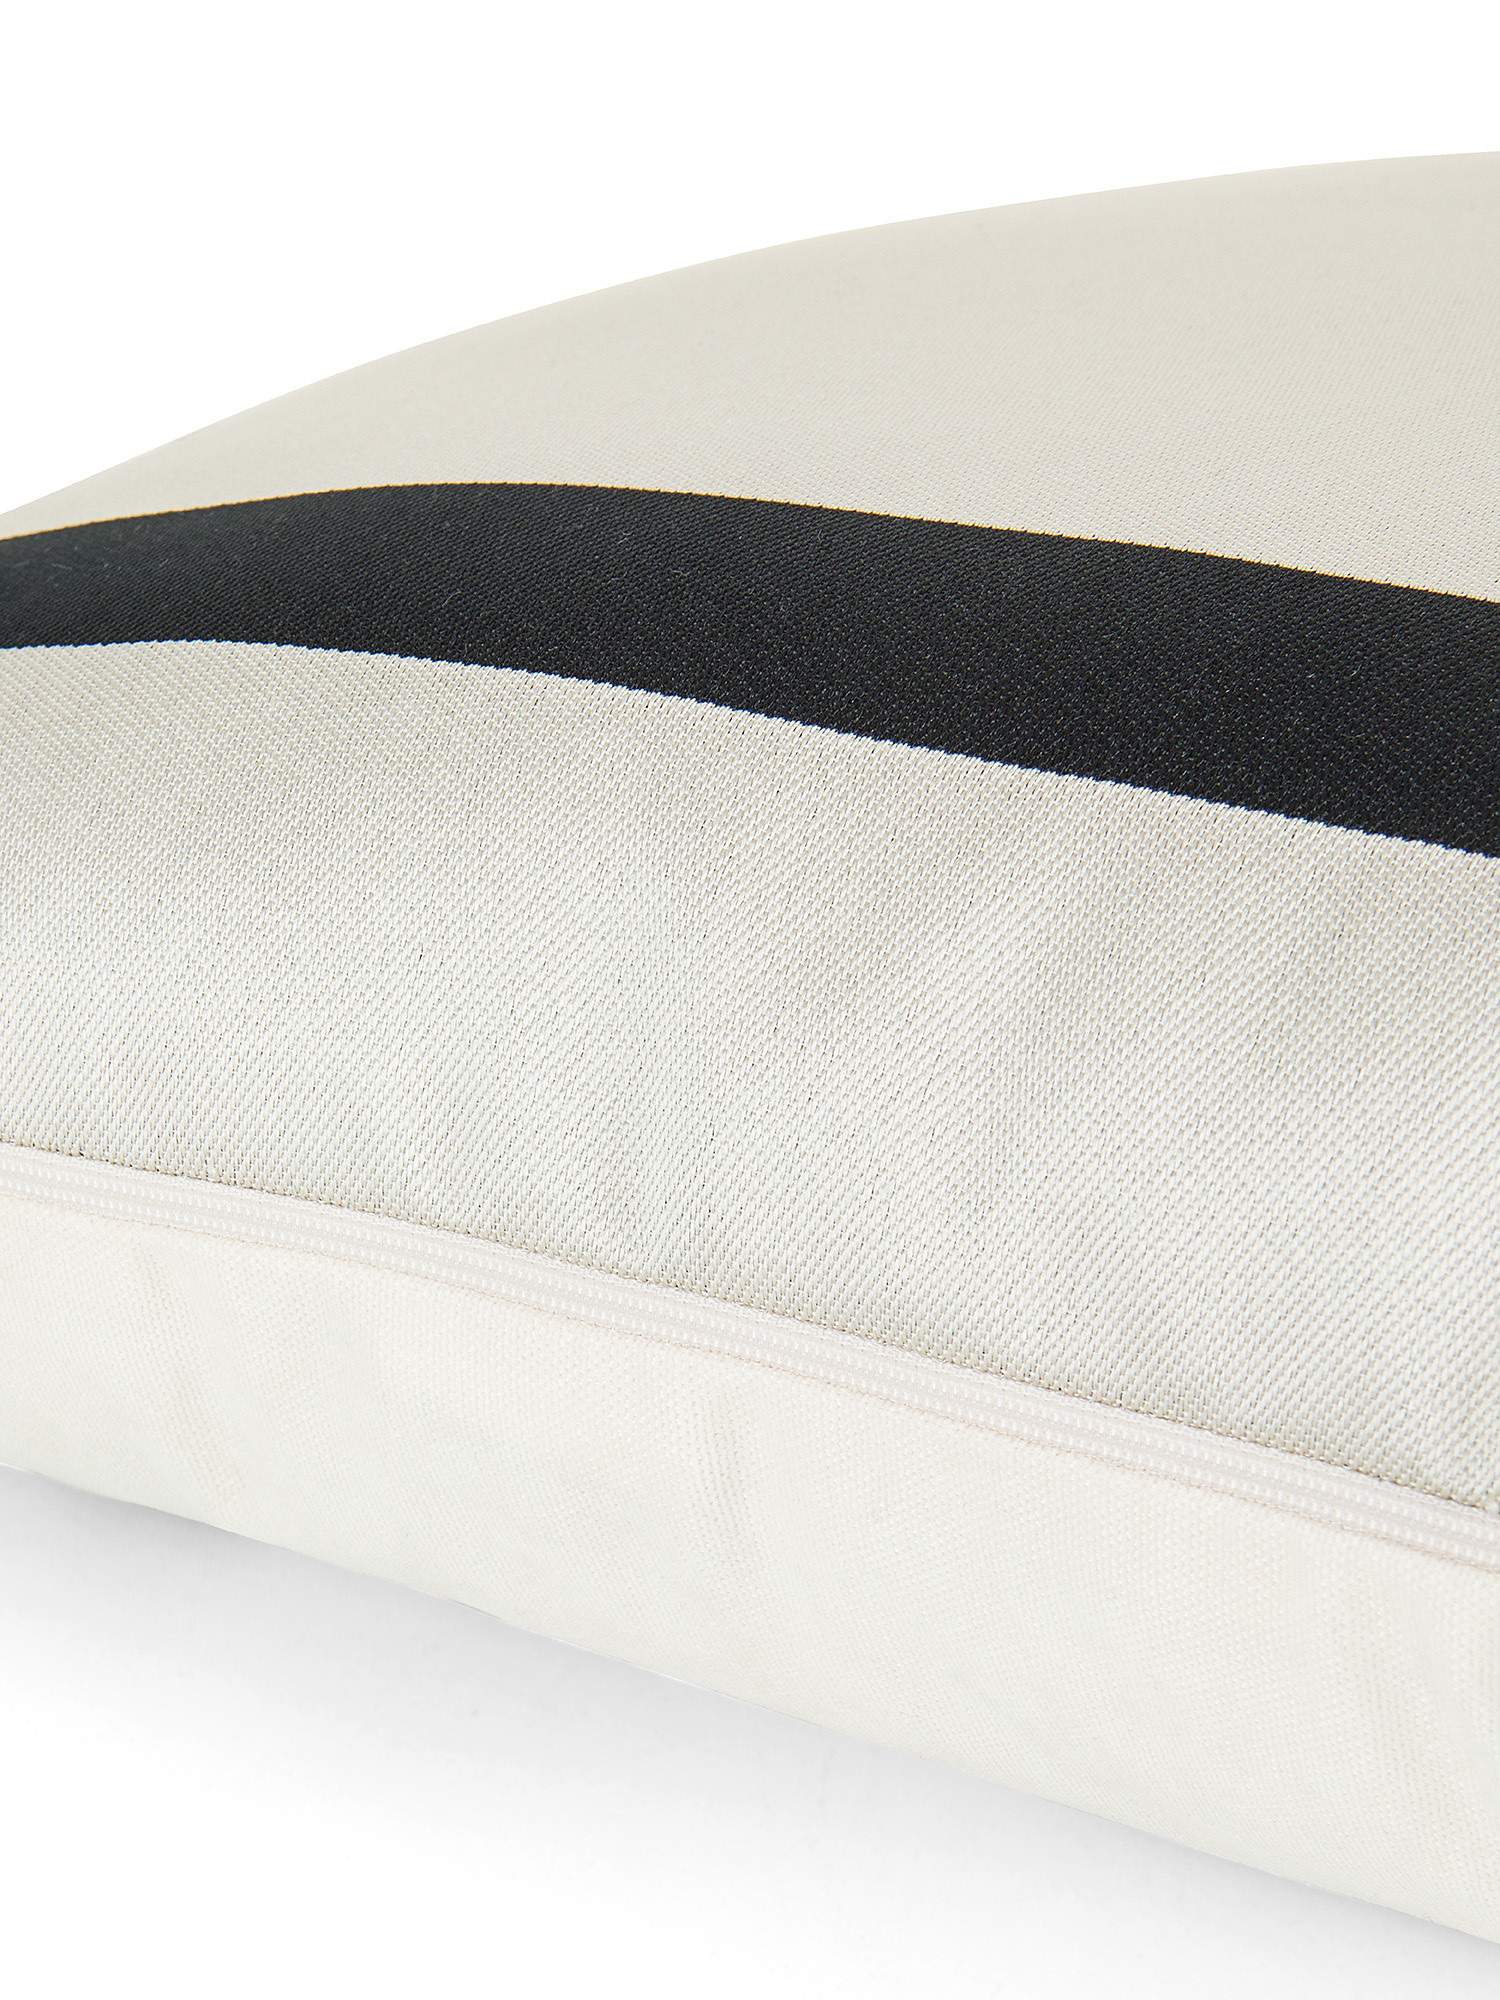 Geometric motif fabric cushion 50x50cm, White, large image number 2